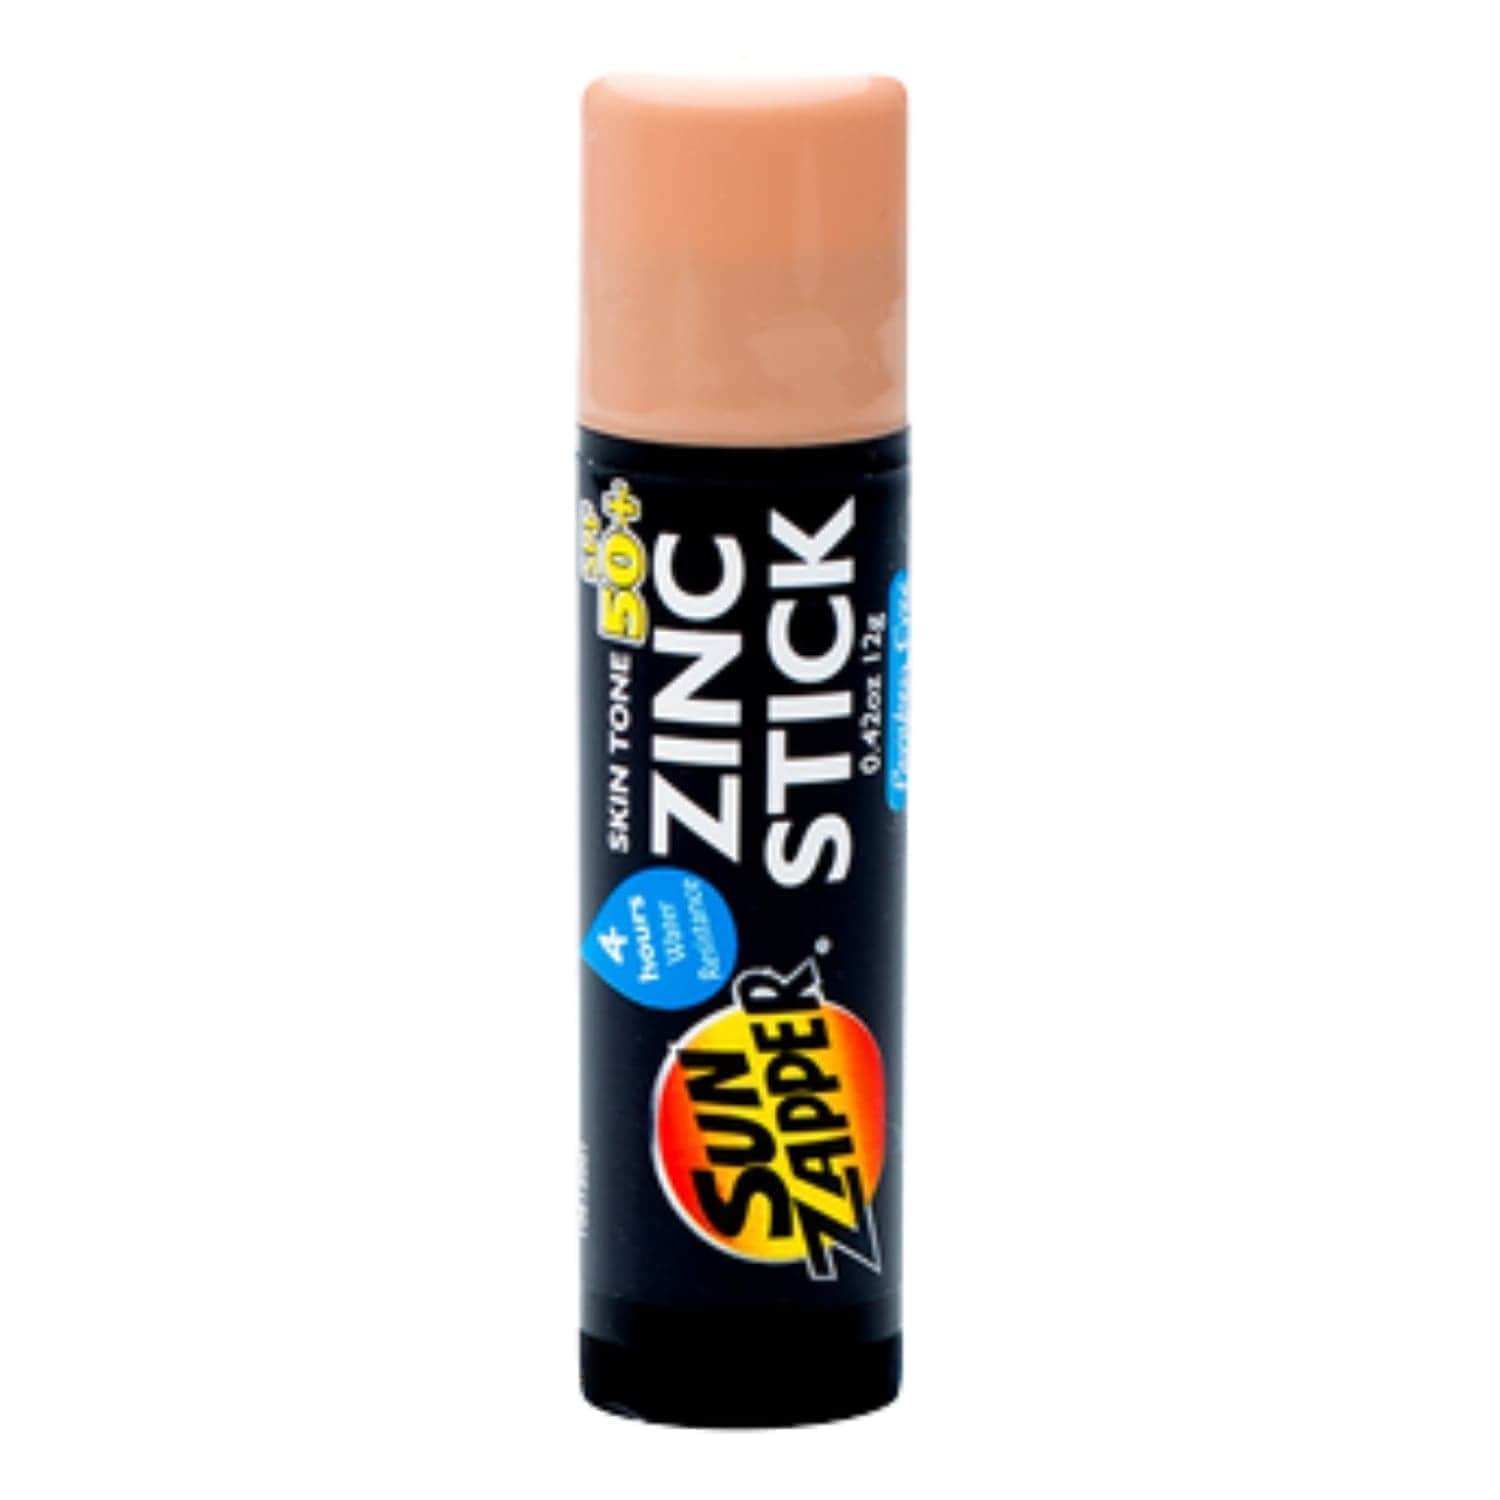 Sun Zapper Coloured SPF 50+ Zinc Stick - Skin Tone - 12g - Sunscreen by Sun Zapper 12g